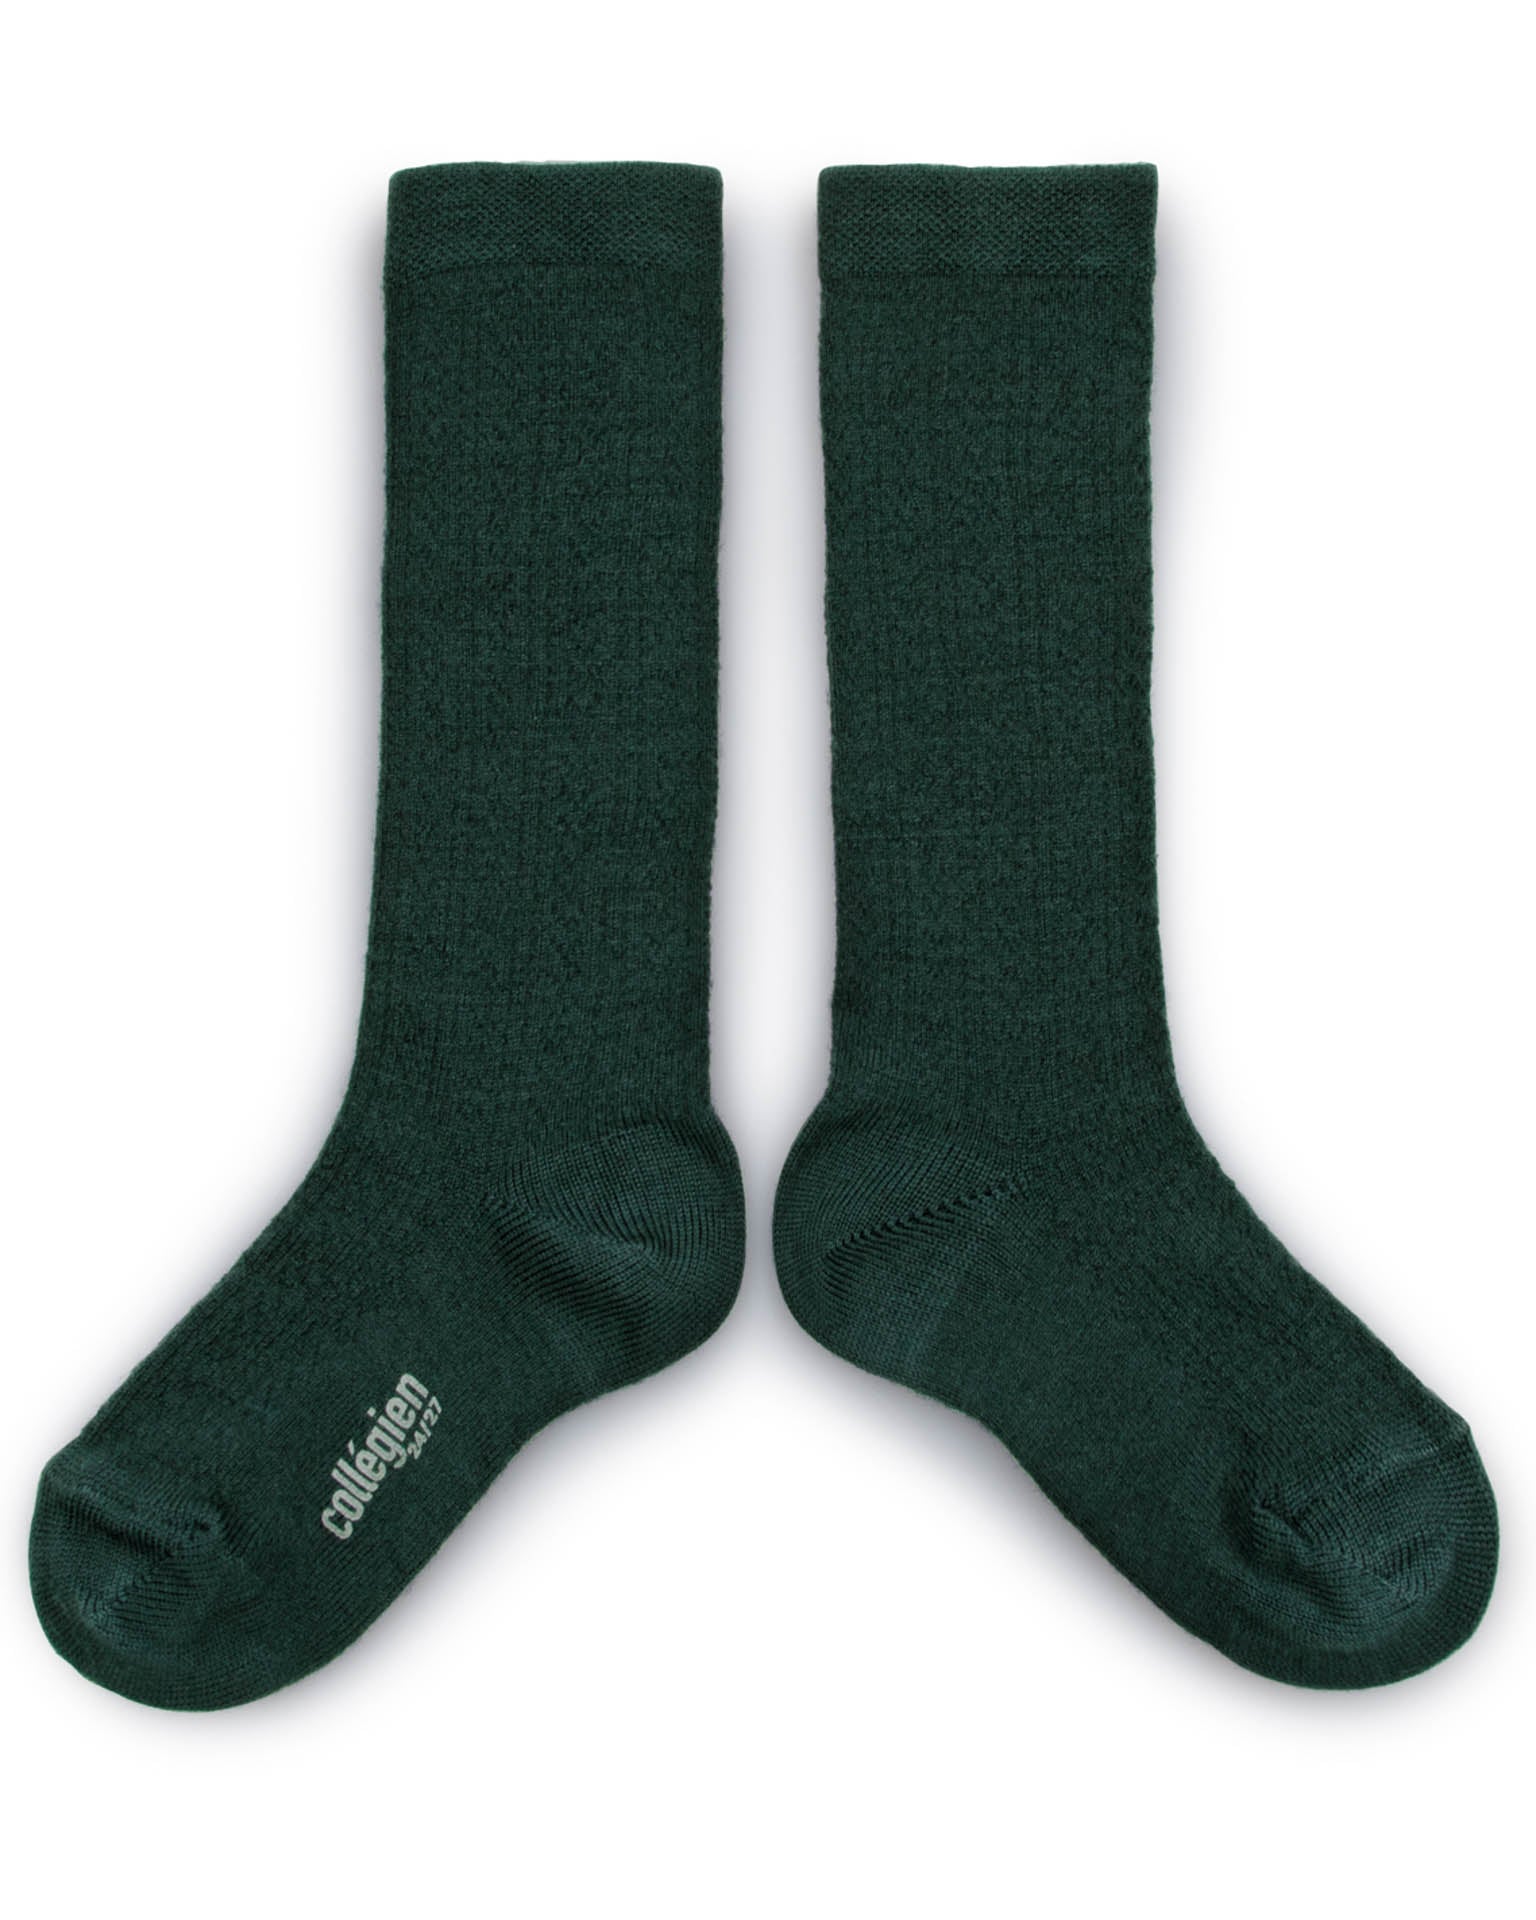 Little collégien accessories adèle knee socks in vert forêt